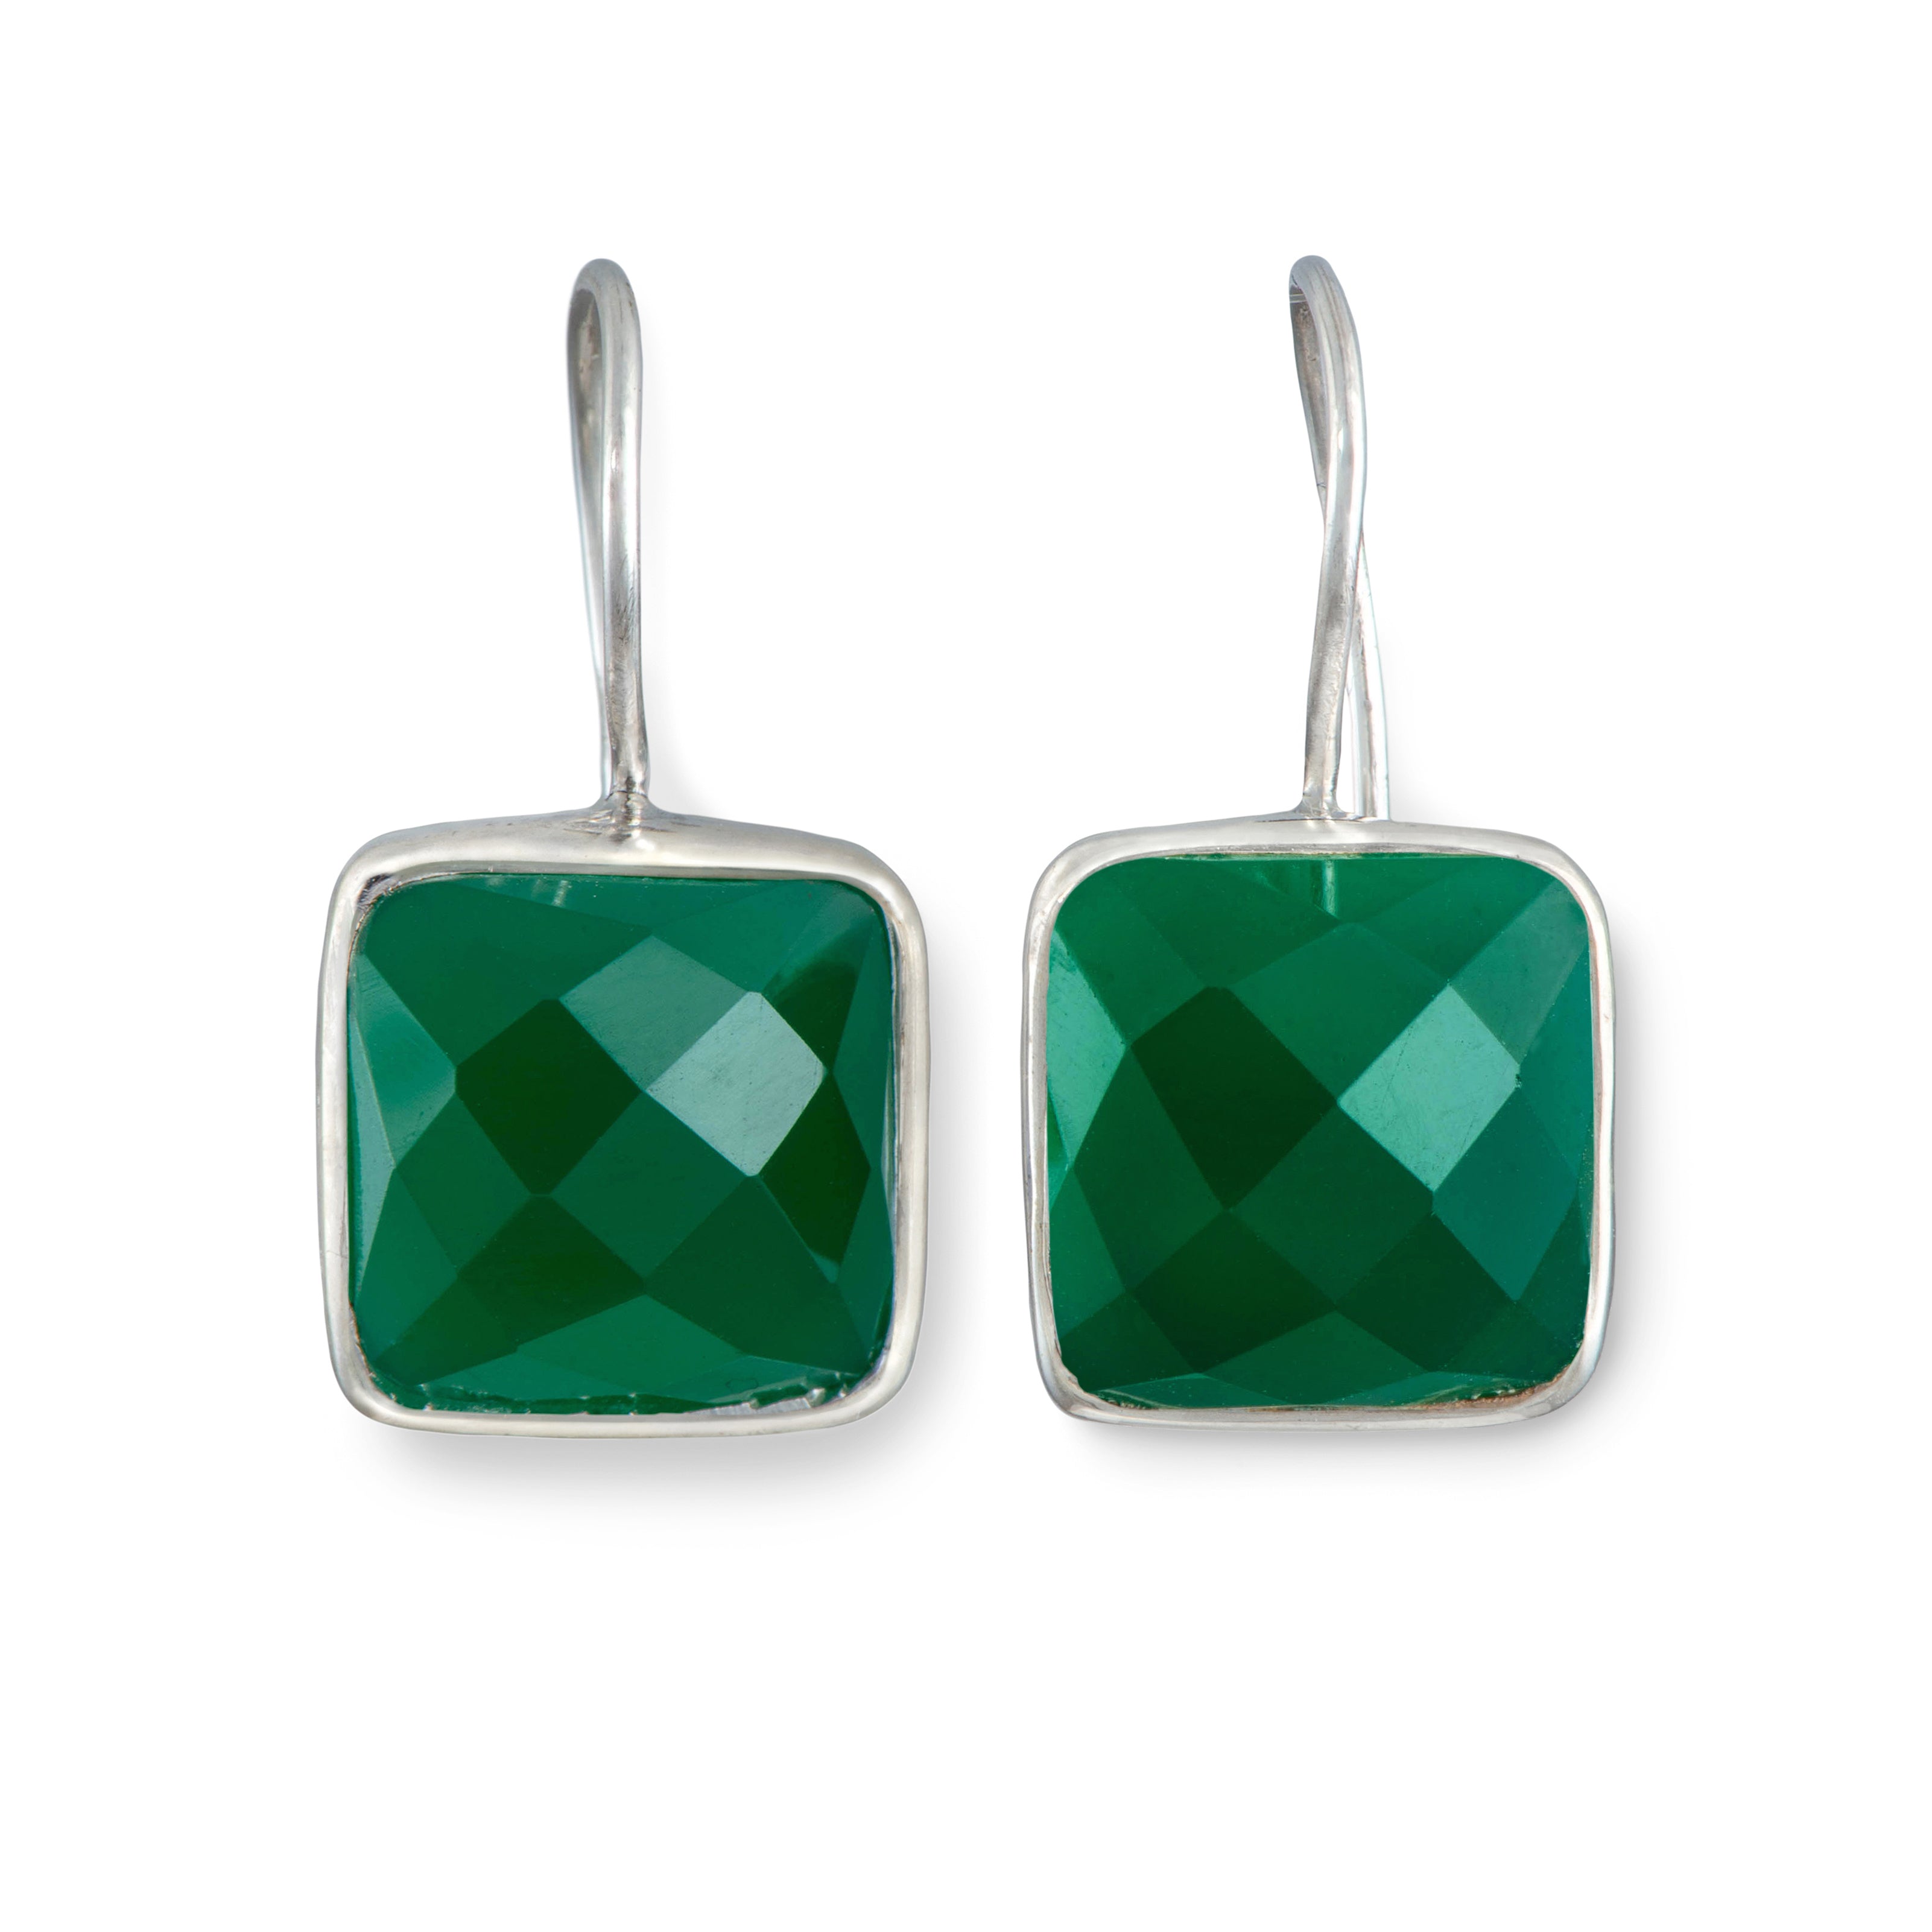 Sterling Silver Square Gemstone Earrings - Green Onyx